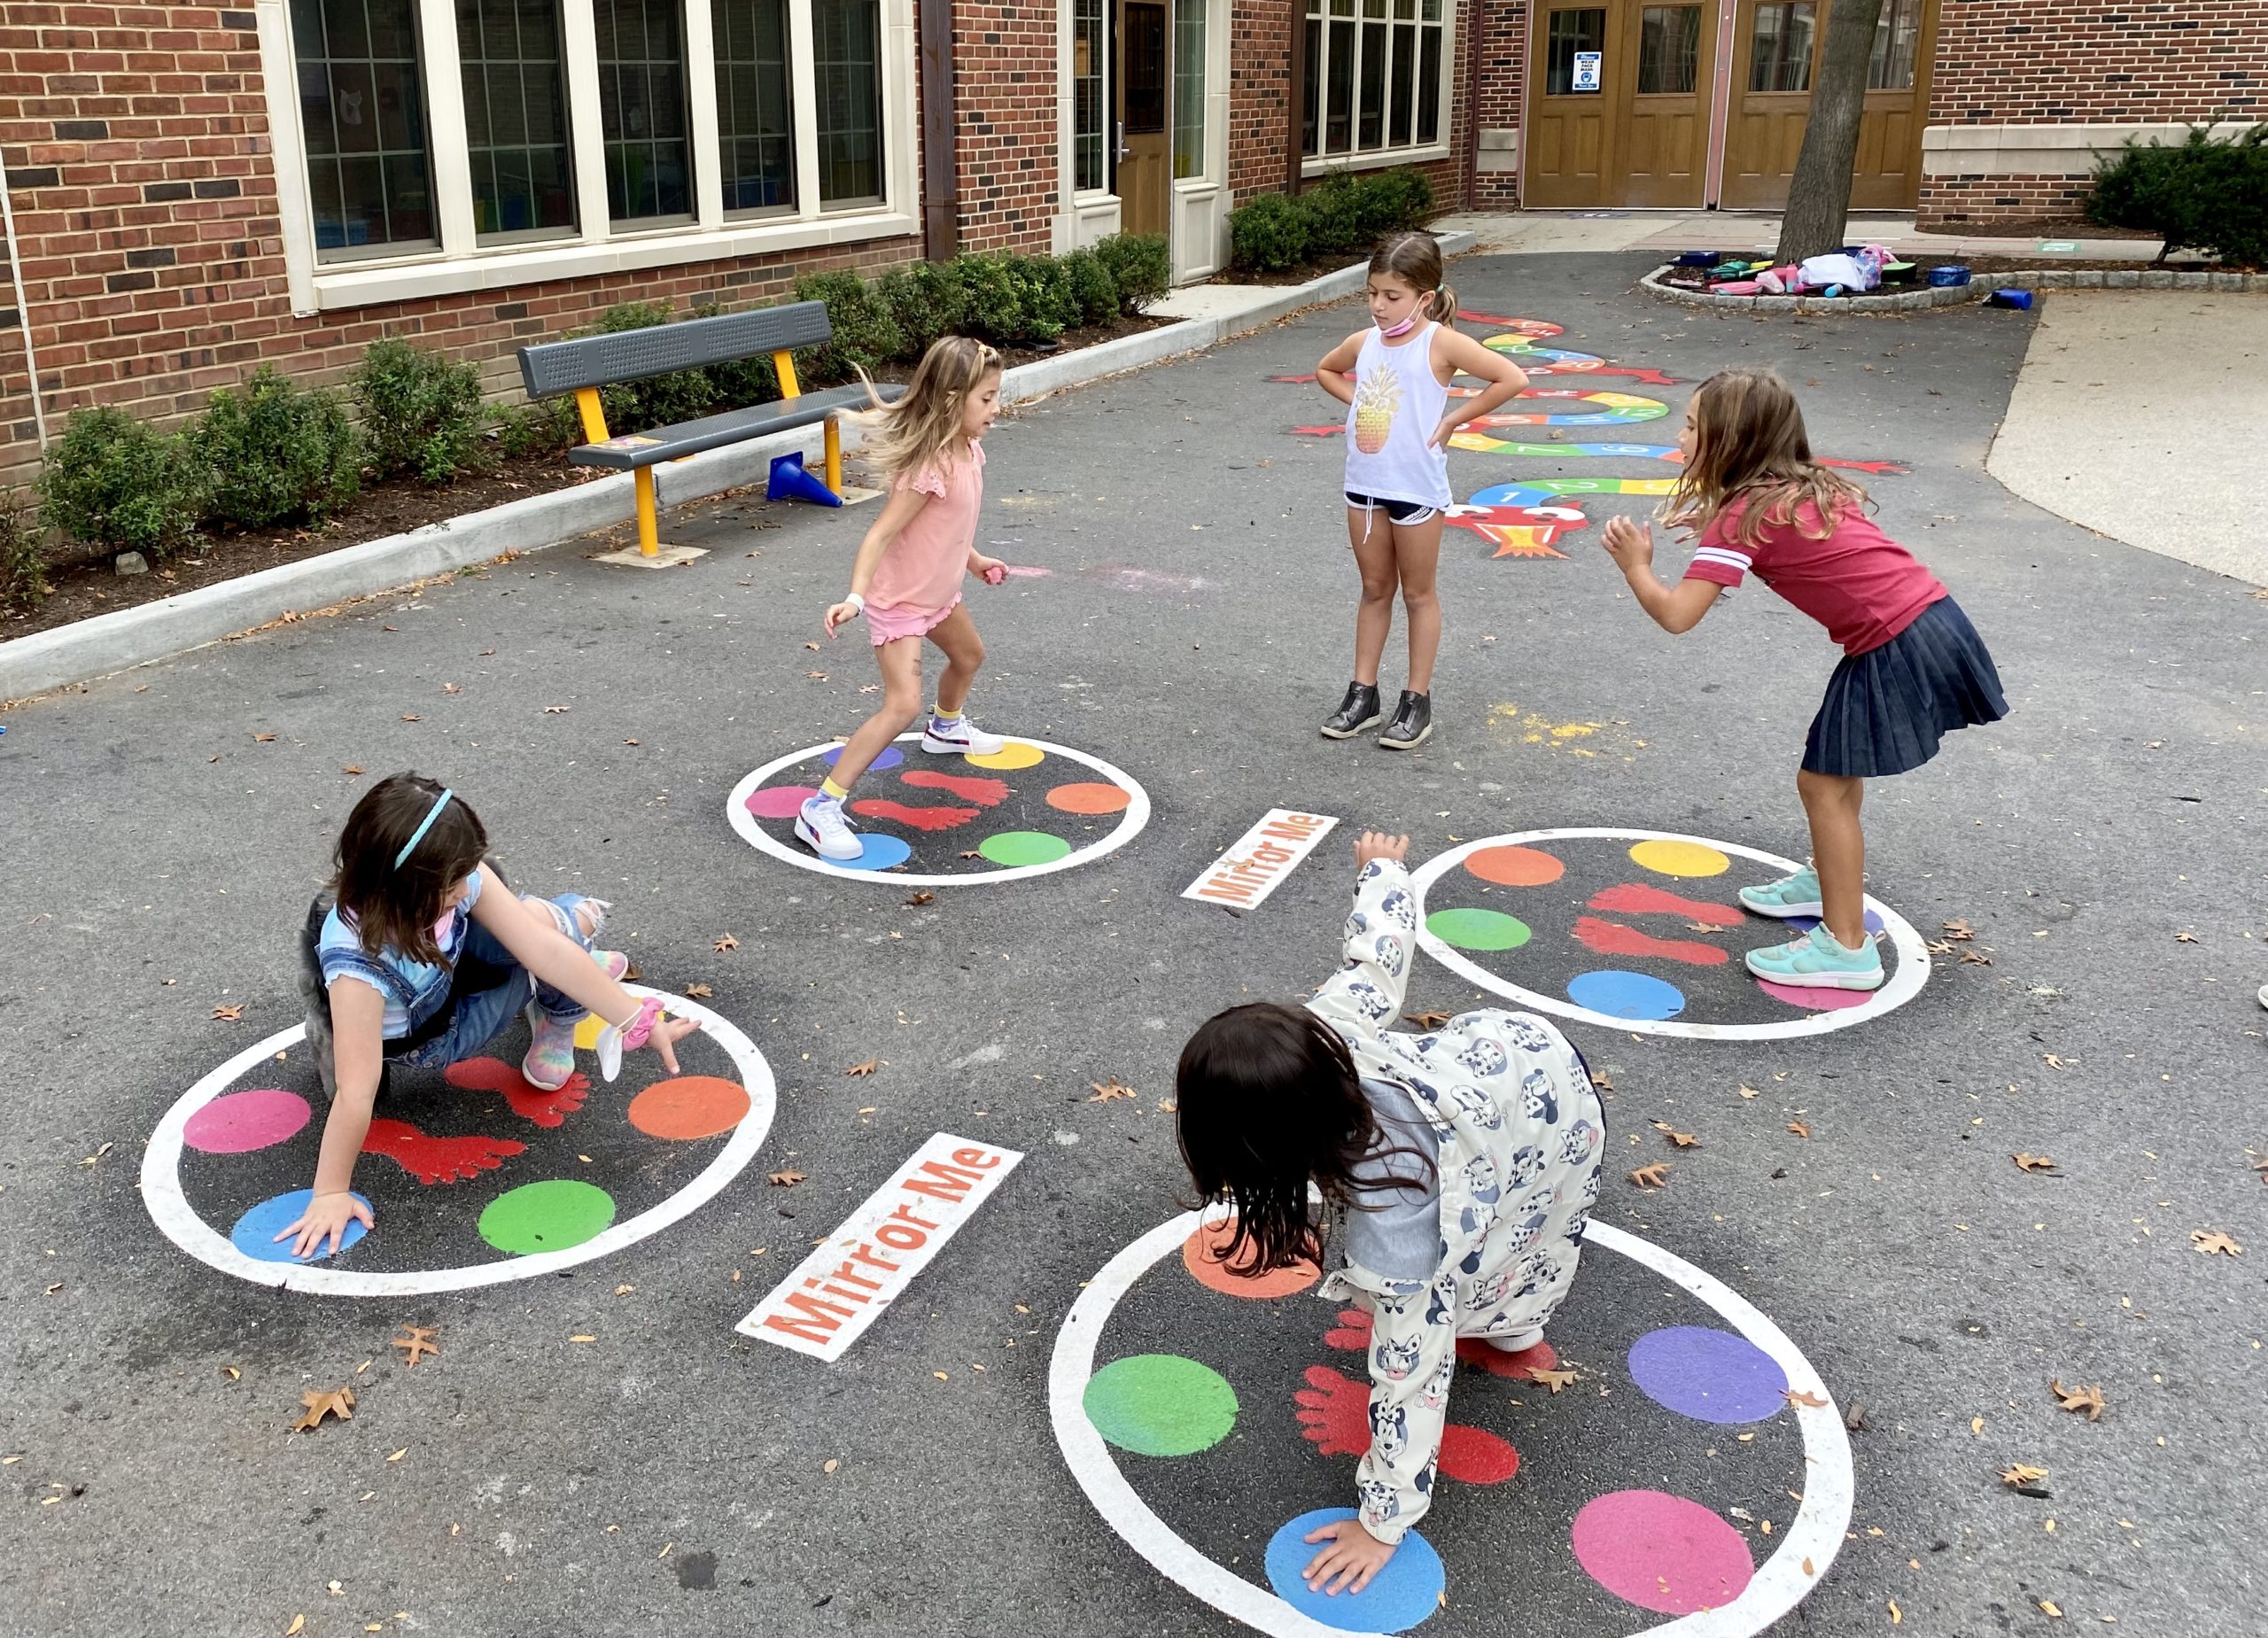 New Vibrant Designs Revitalize Elementary School Playground